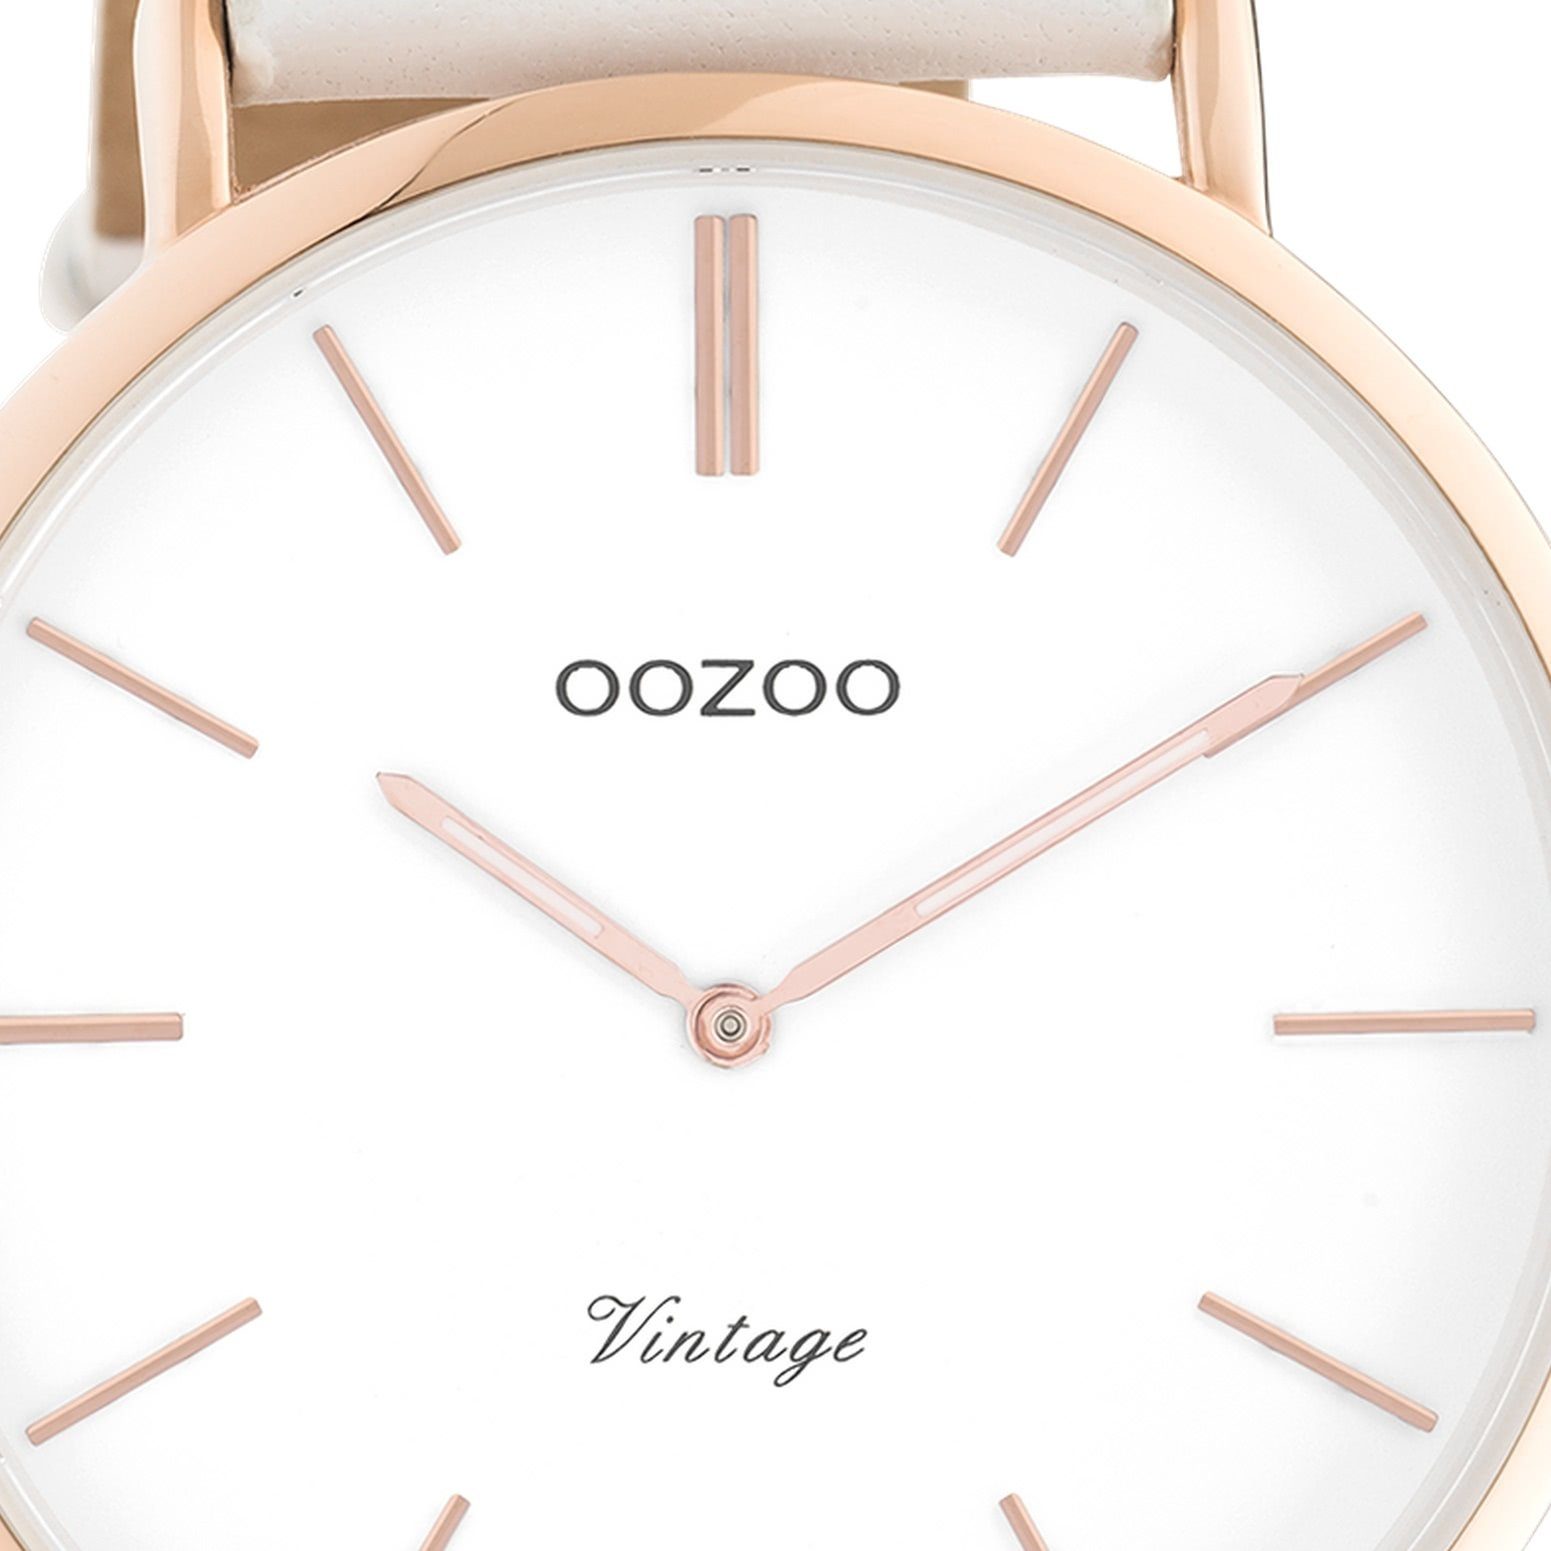 OOZOO Quarzuhr Oozoo Damen Armbanduhr 44mm), Damenuhr weiß, Vintage, groß Lederarmband (ca. Fashion rund